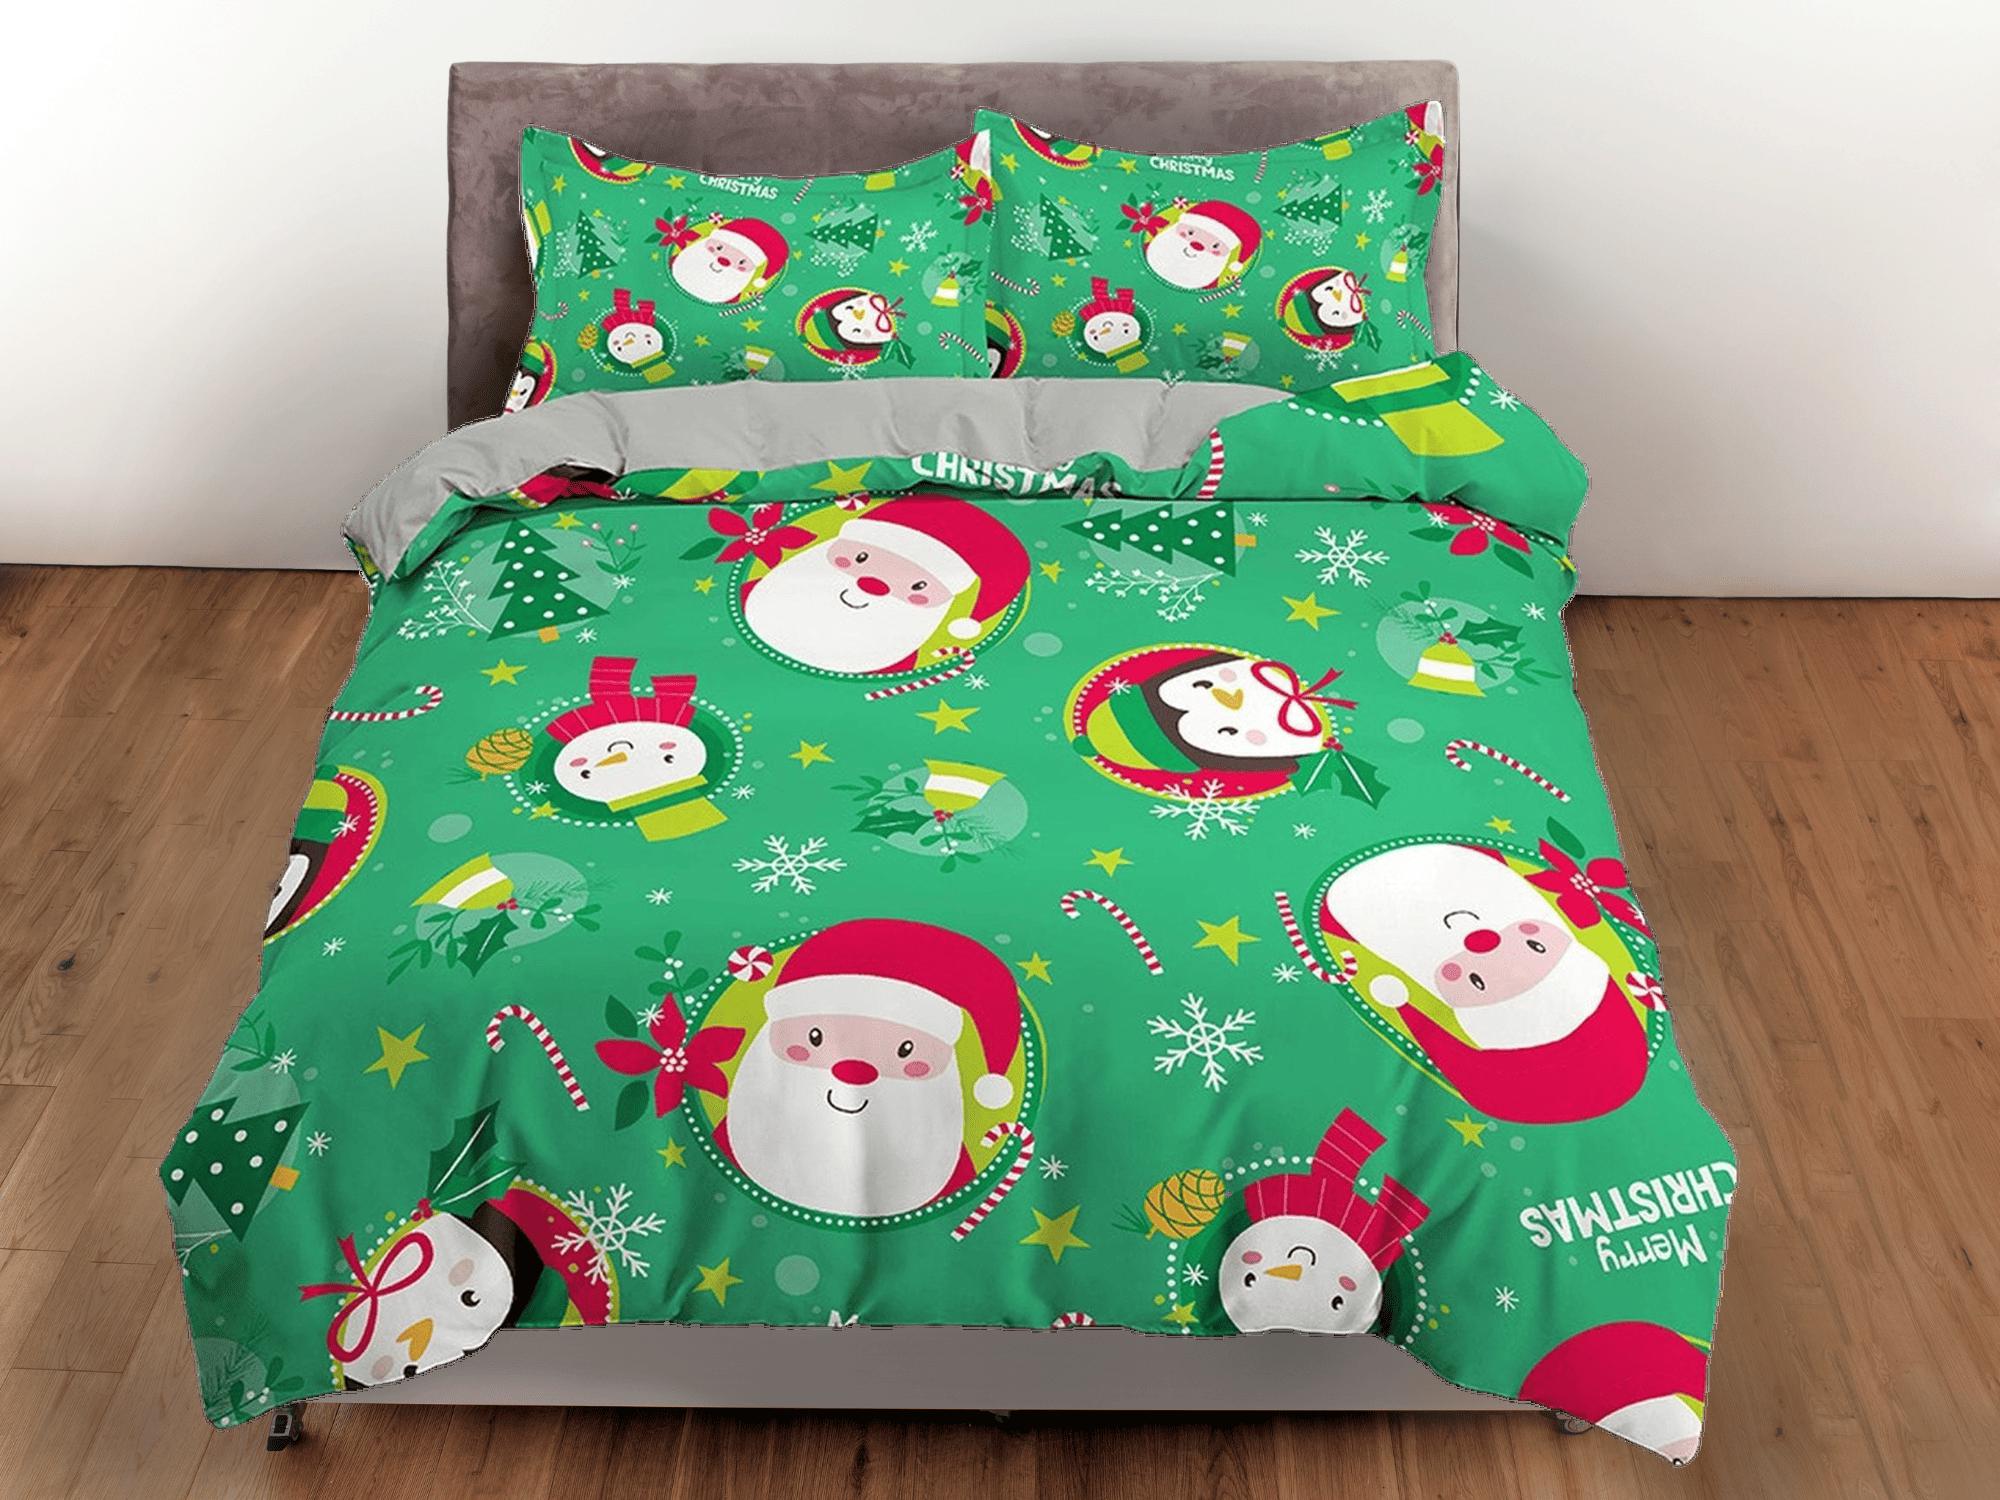 daintyduvet Cute santa claus green duvet cover set christmas full size bedding & pillowcase, college bedding, toddler bedding, holiday gift room decor